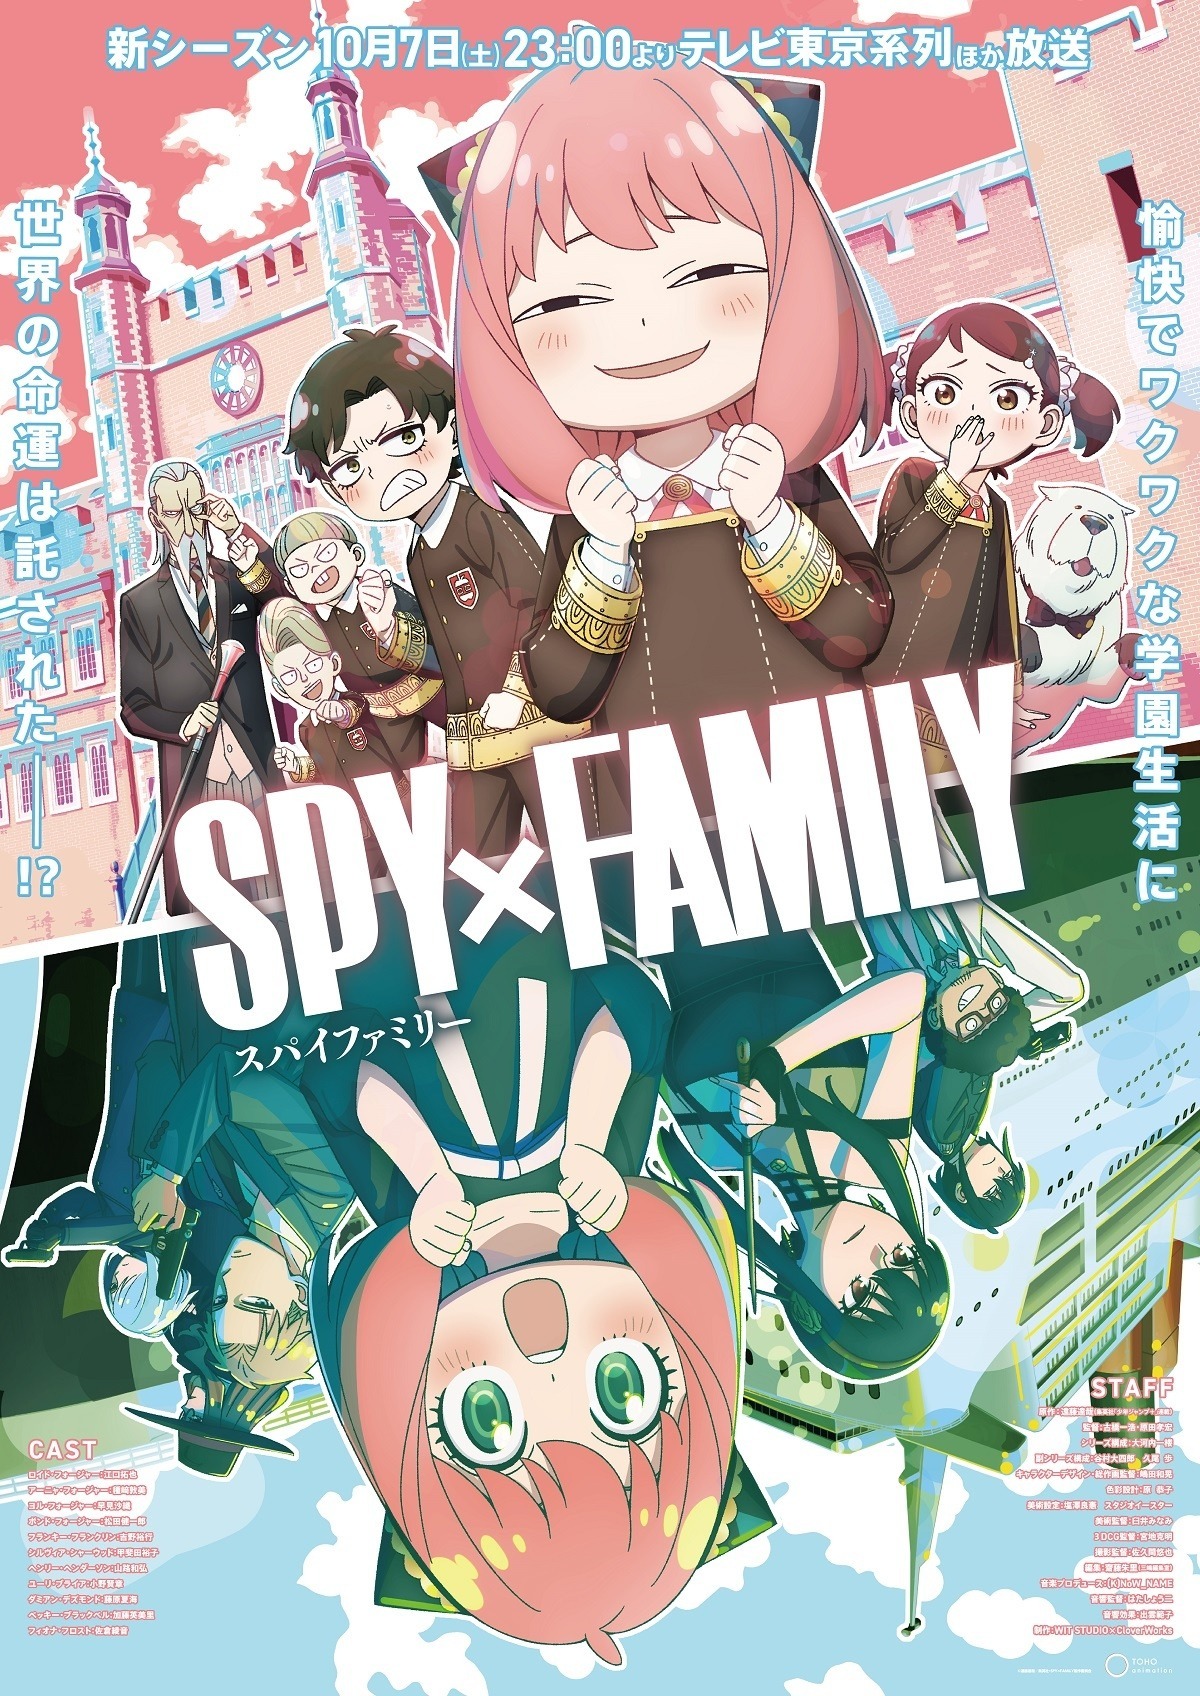 Spy x Family Season 2 Reveals Episode Count